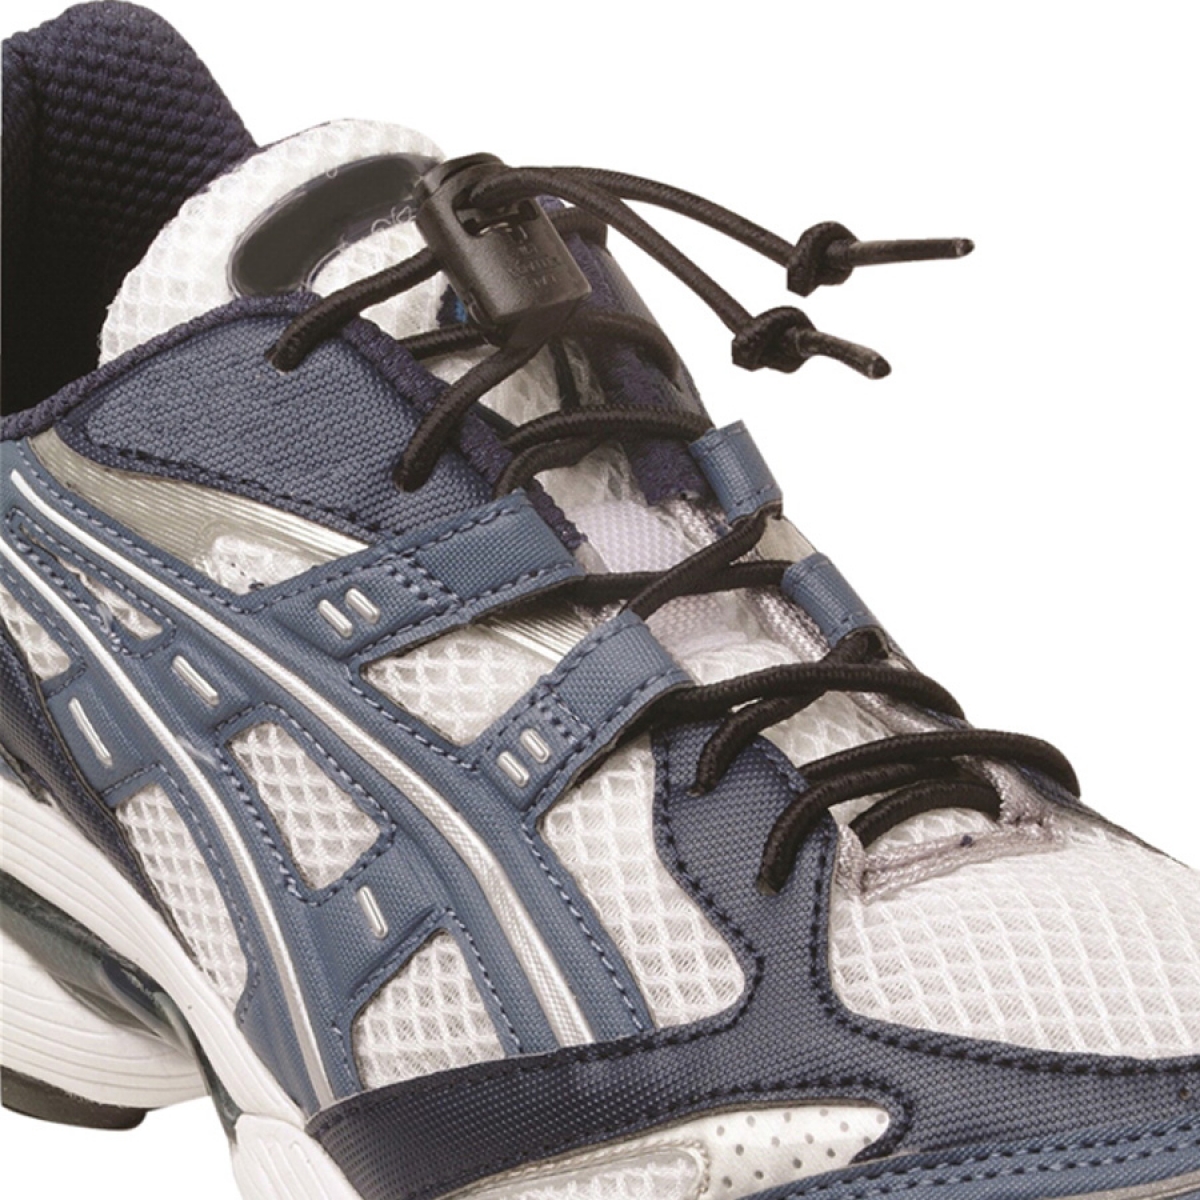 Elastic Shoe Laces, Cord-Lock, Black, 1 